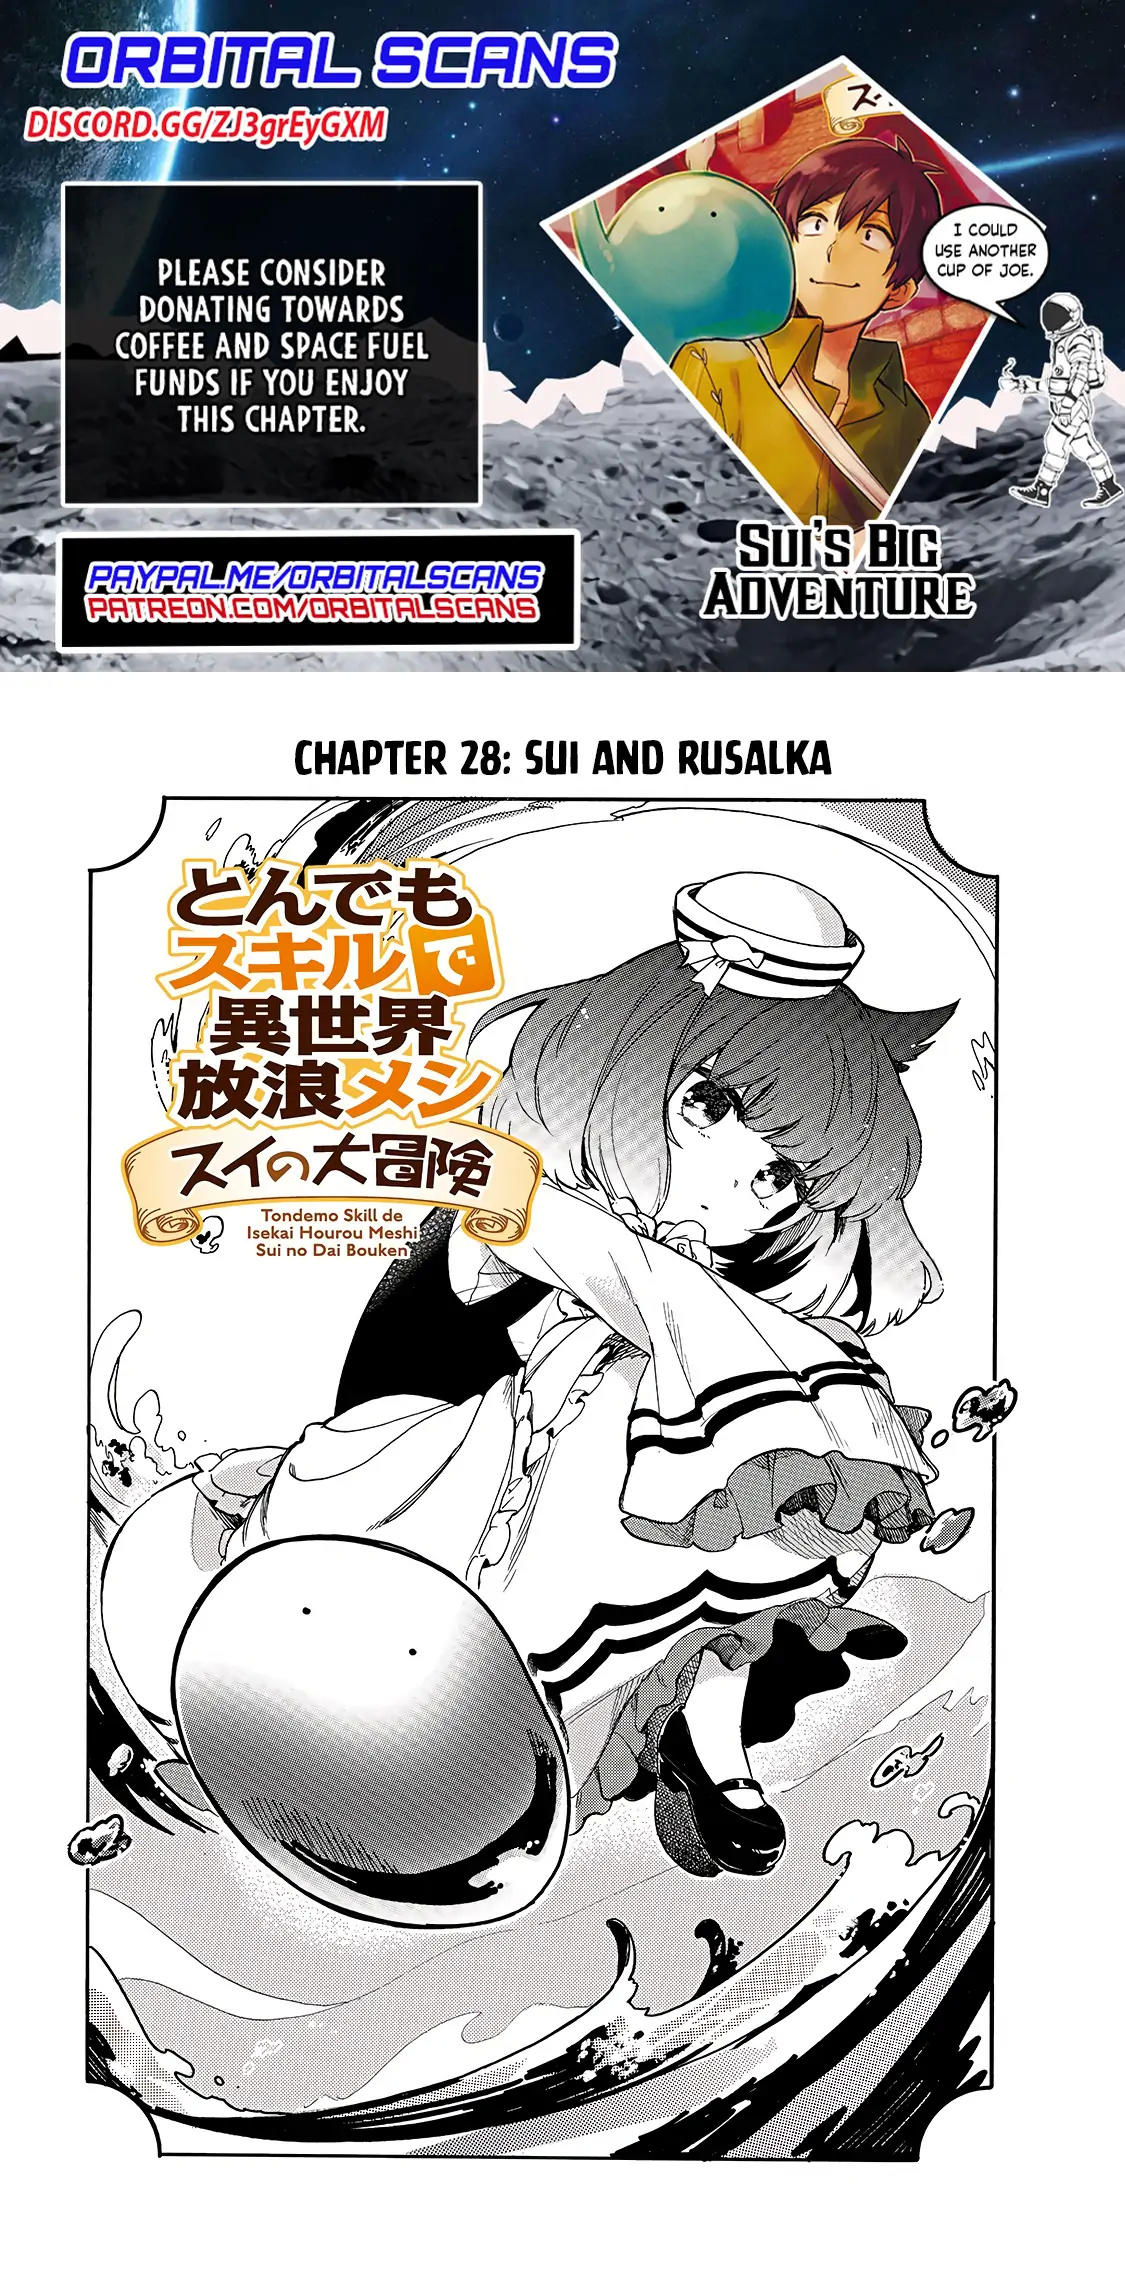 Read Tondemo Skill De Isekai Hourou Meshi: Sui No Daibouken Chapter 28 on  Mangakakalot